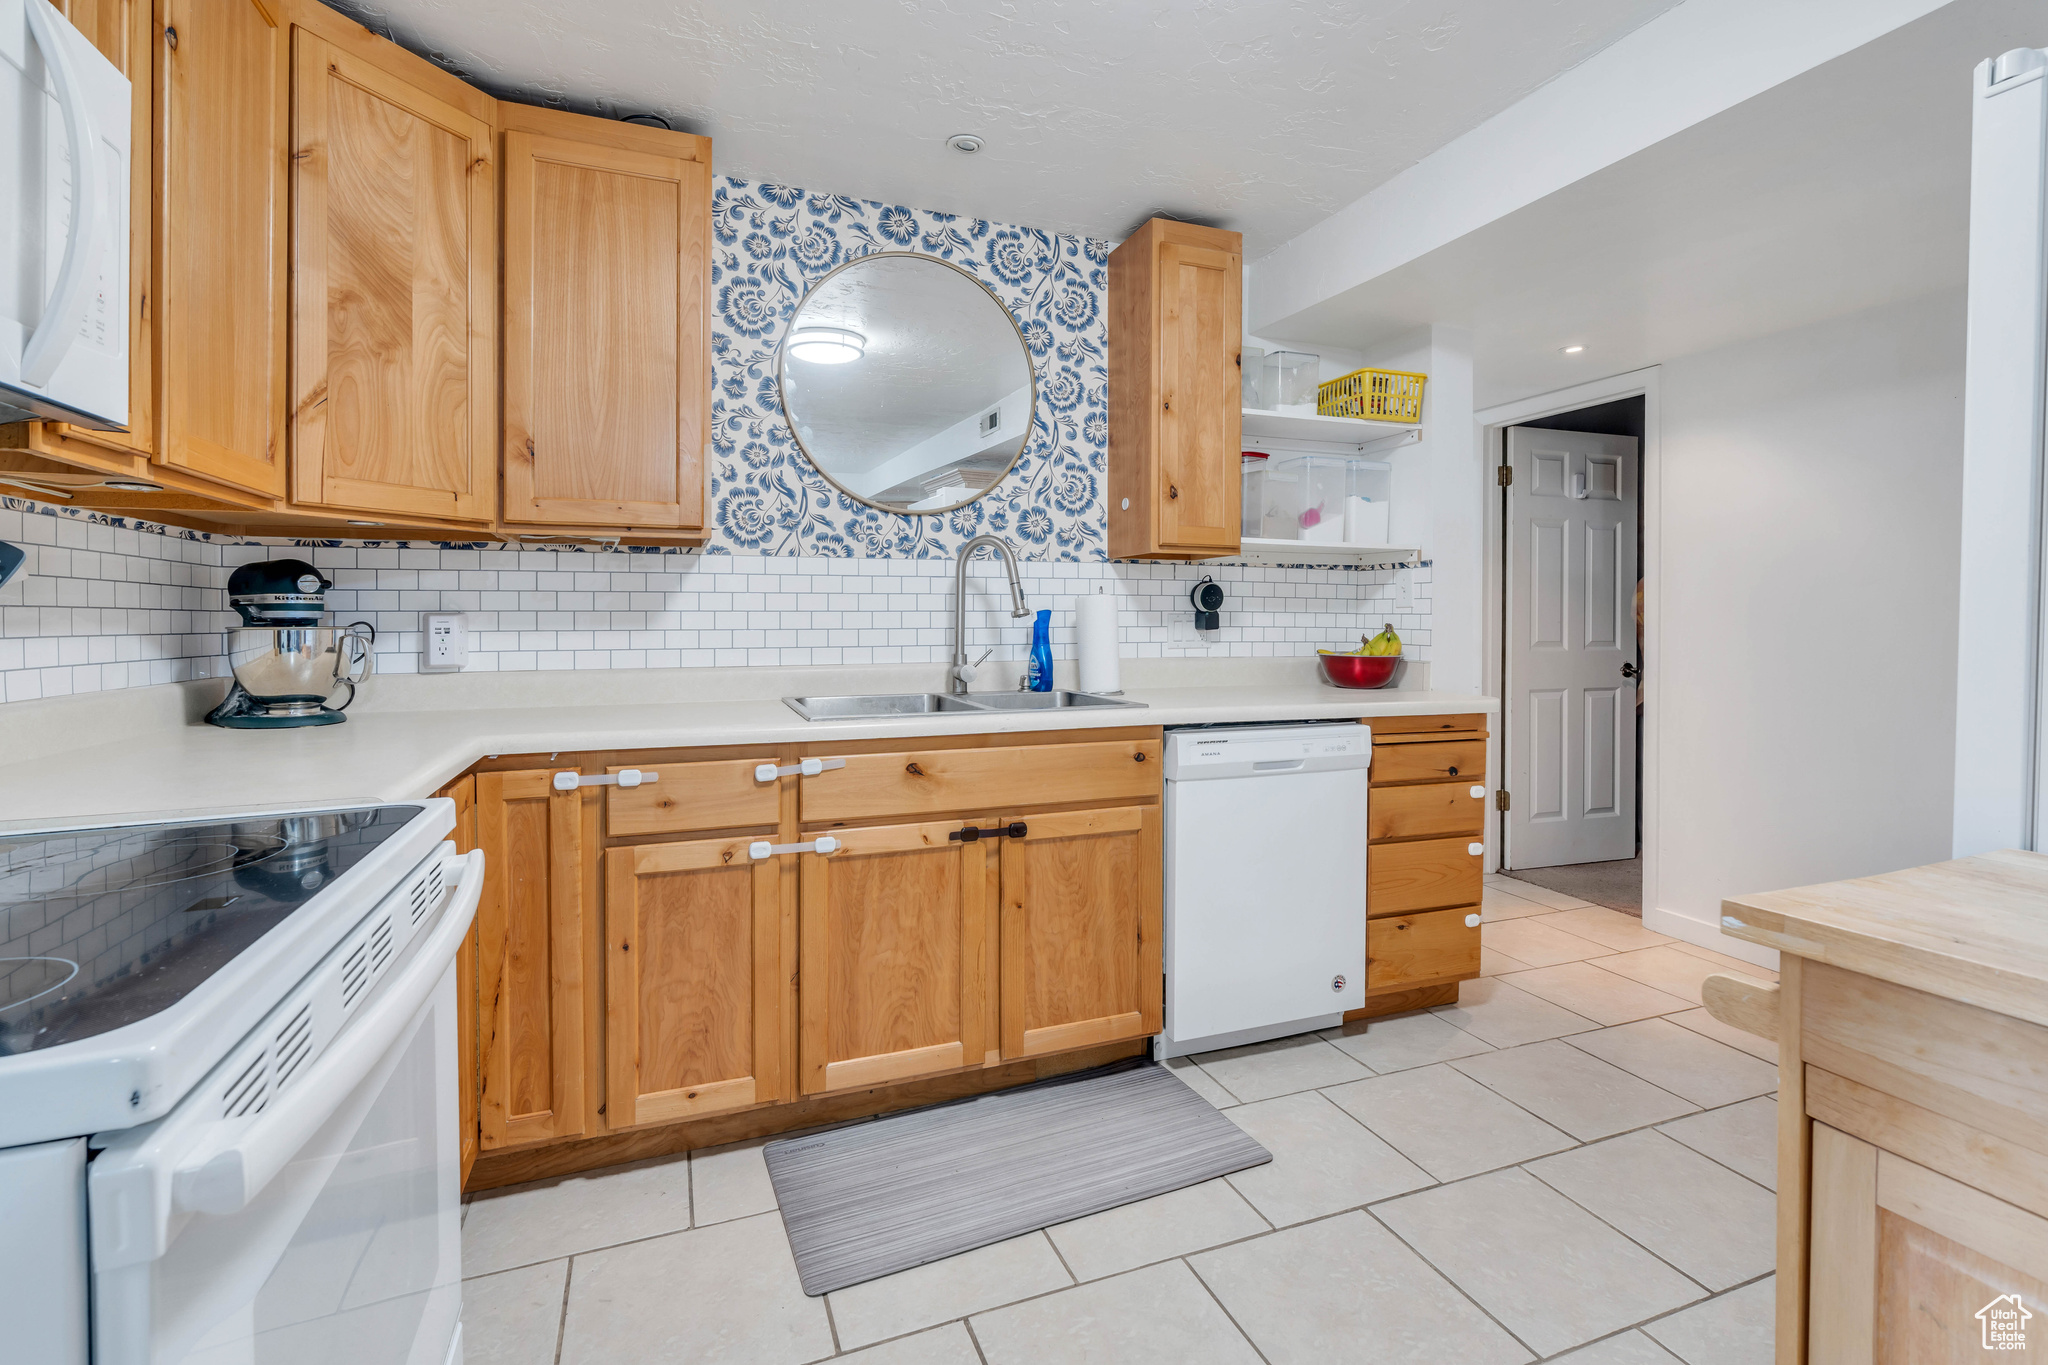 Kitchen featuring sink, white appliances, tasteful backsplash, and light tile floors